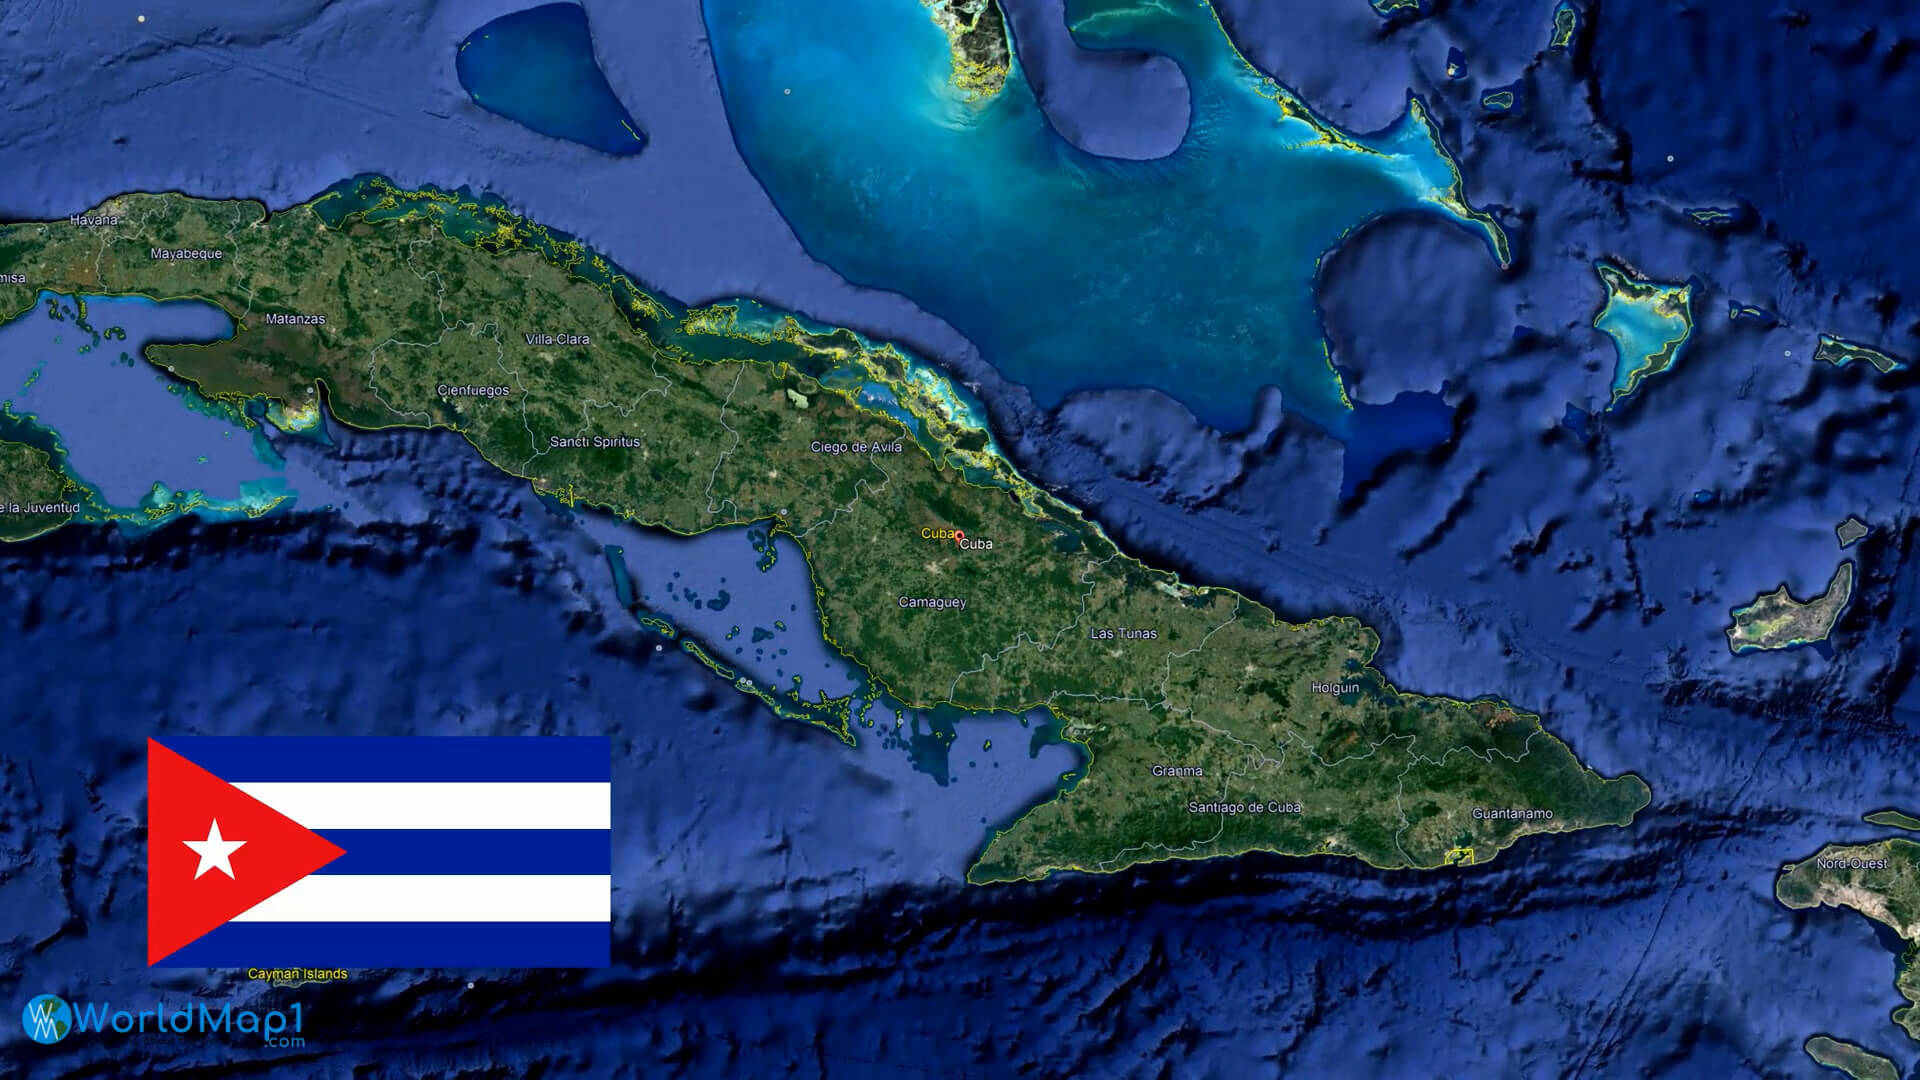 Cuba Flag and Google Map